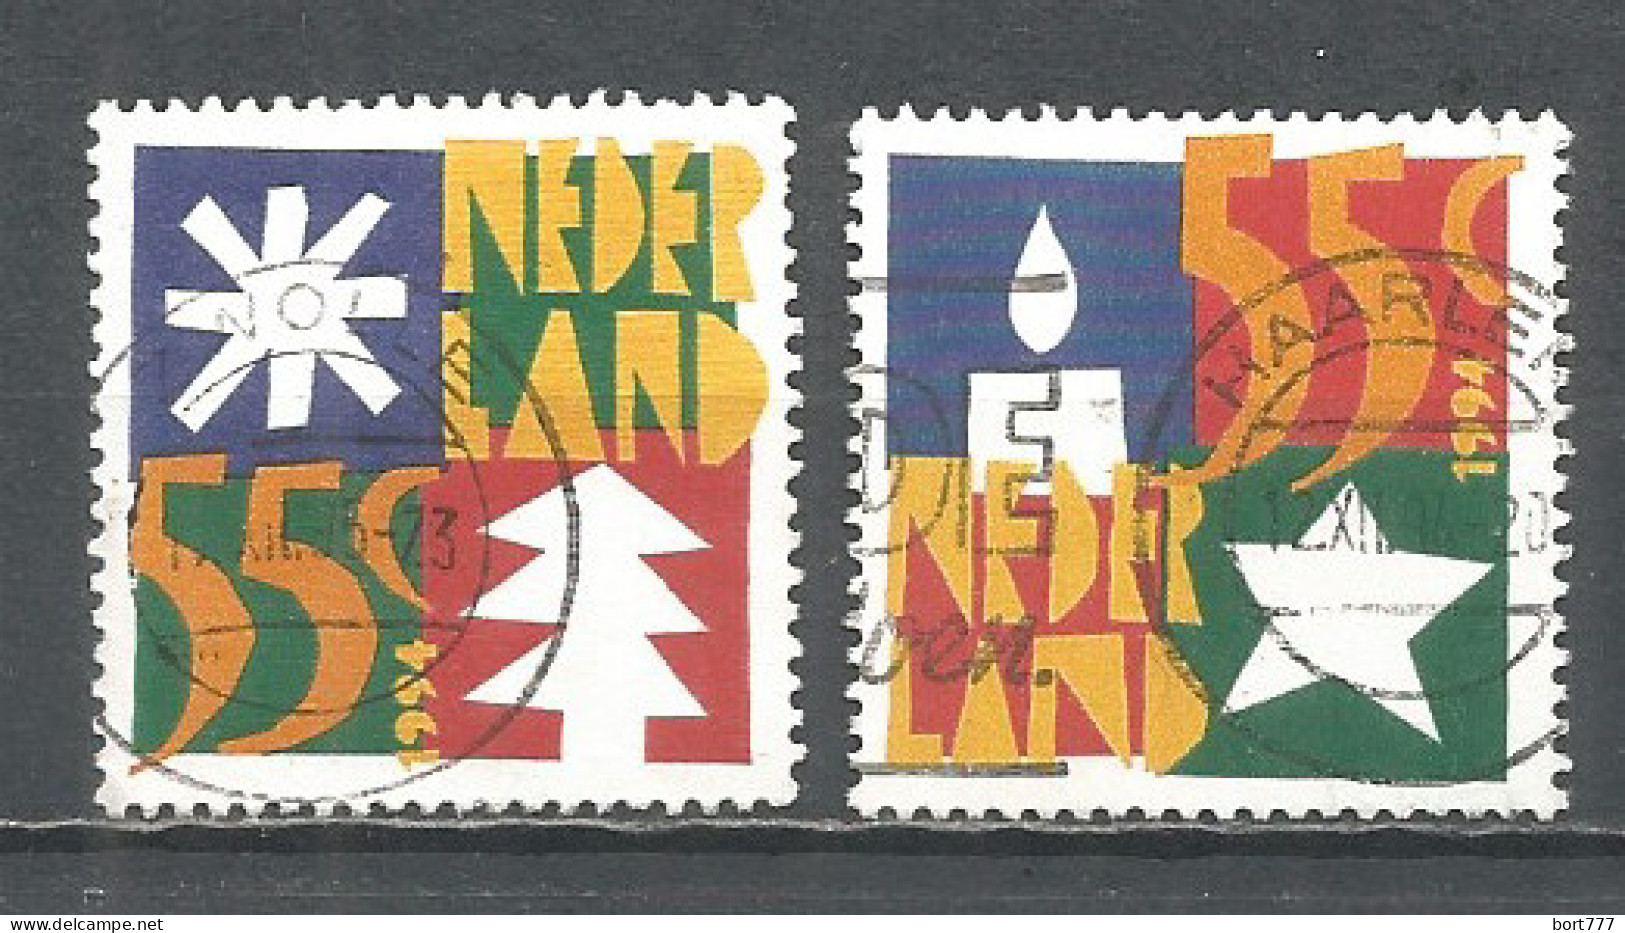 Netherlands 1994 Year, Used Stamps ,Mi 1528-29 - Oblitérés